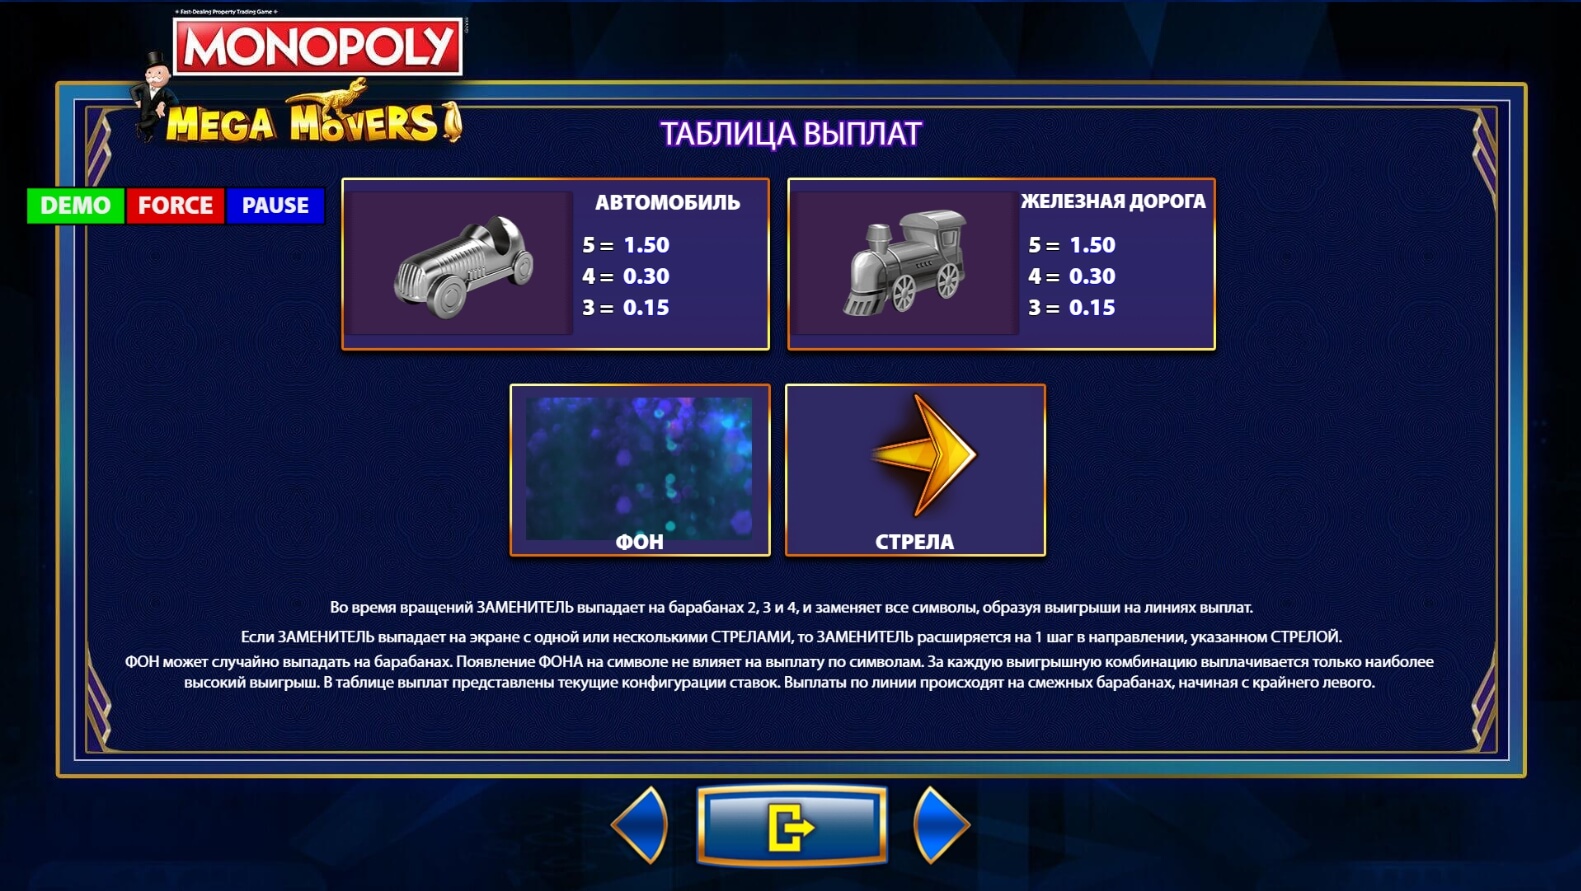 monopoly mega movers slot machine detail image 6